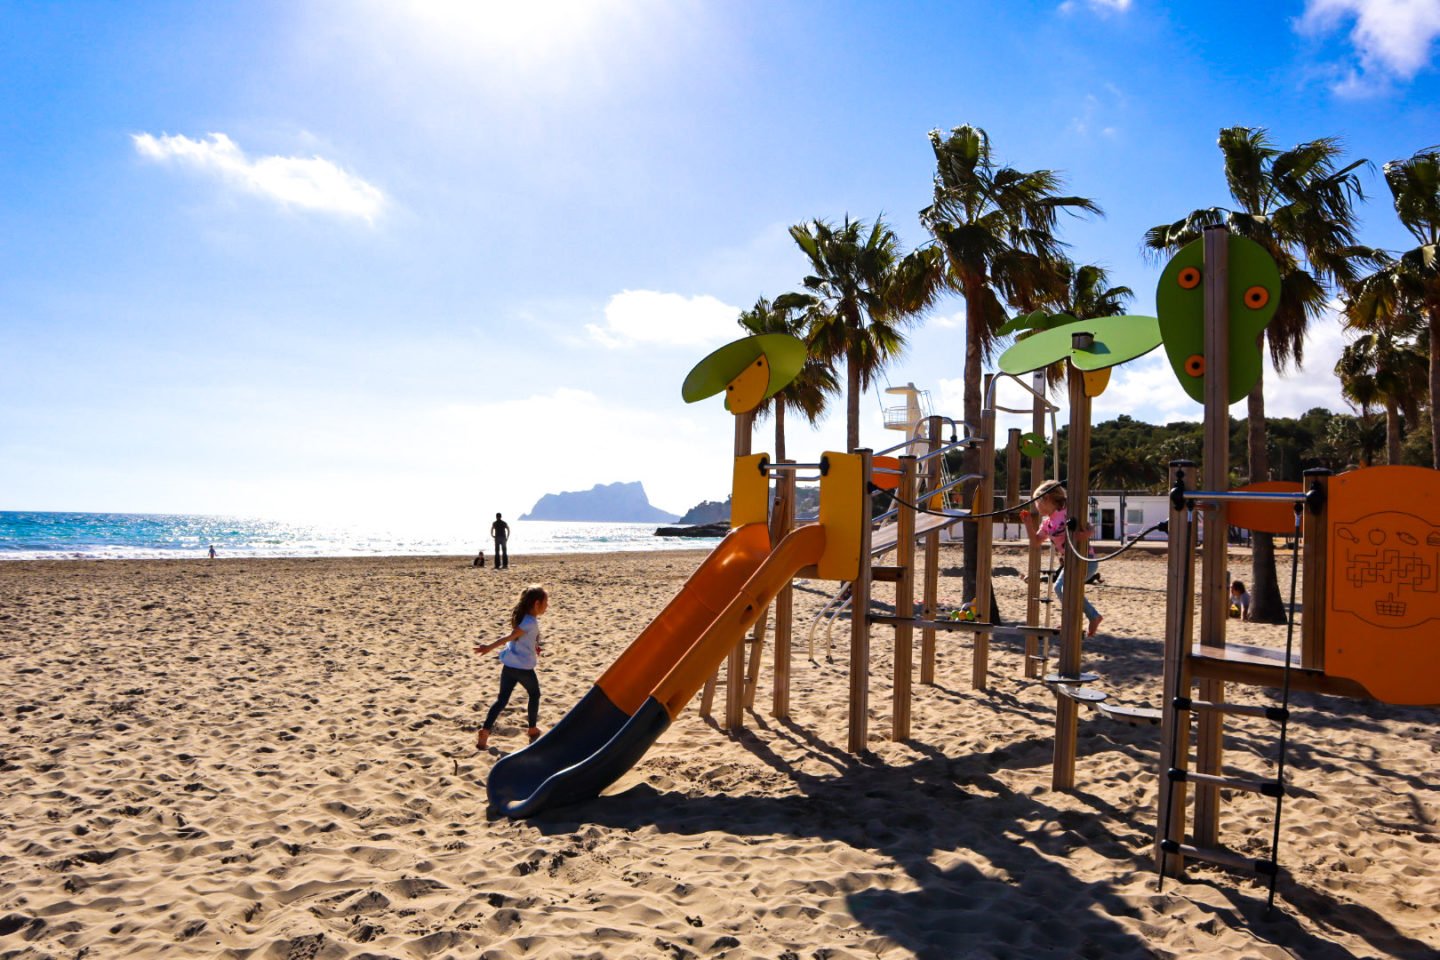 Playa de l'ampolla playground with kids, Moraira main beach